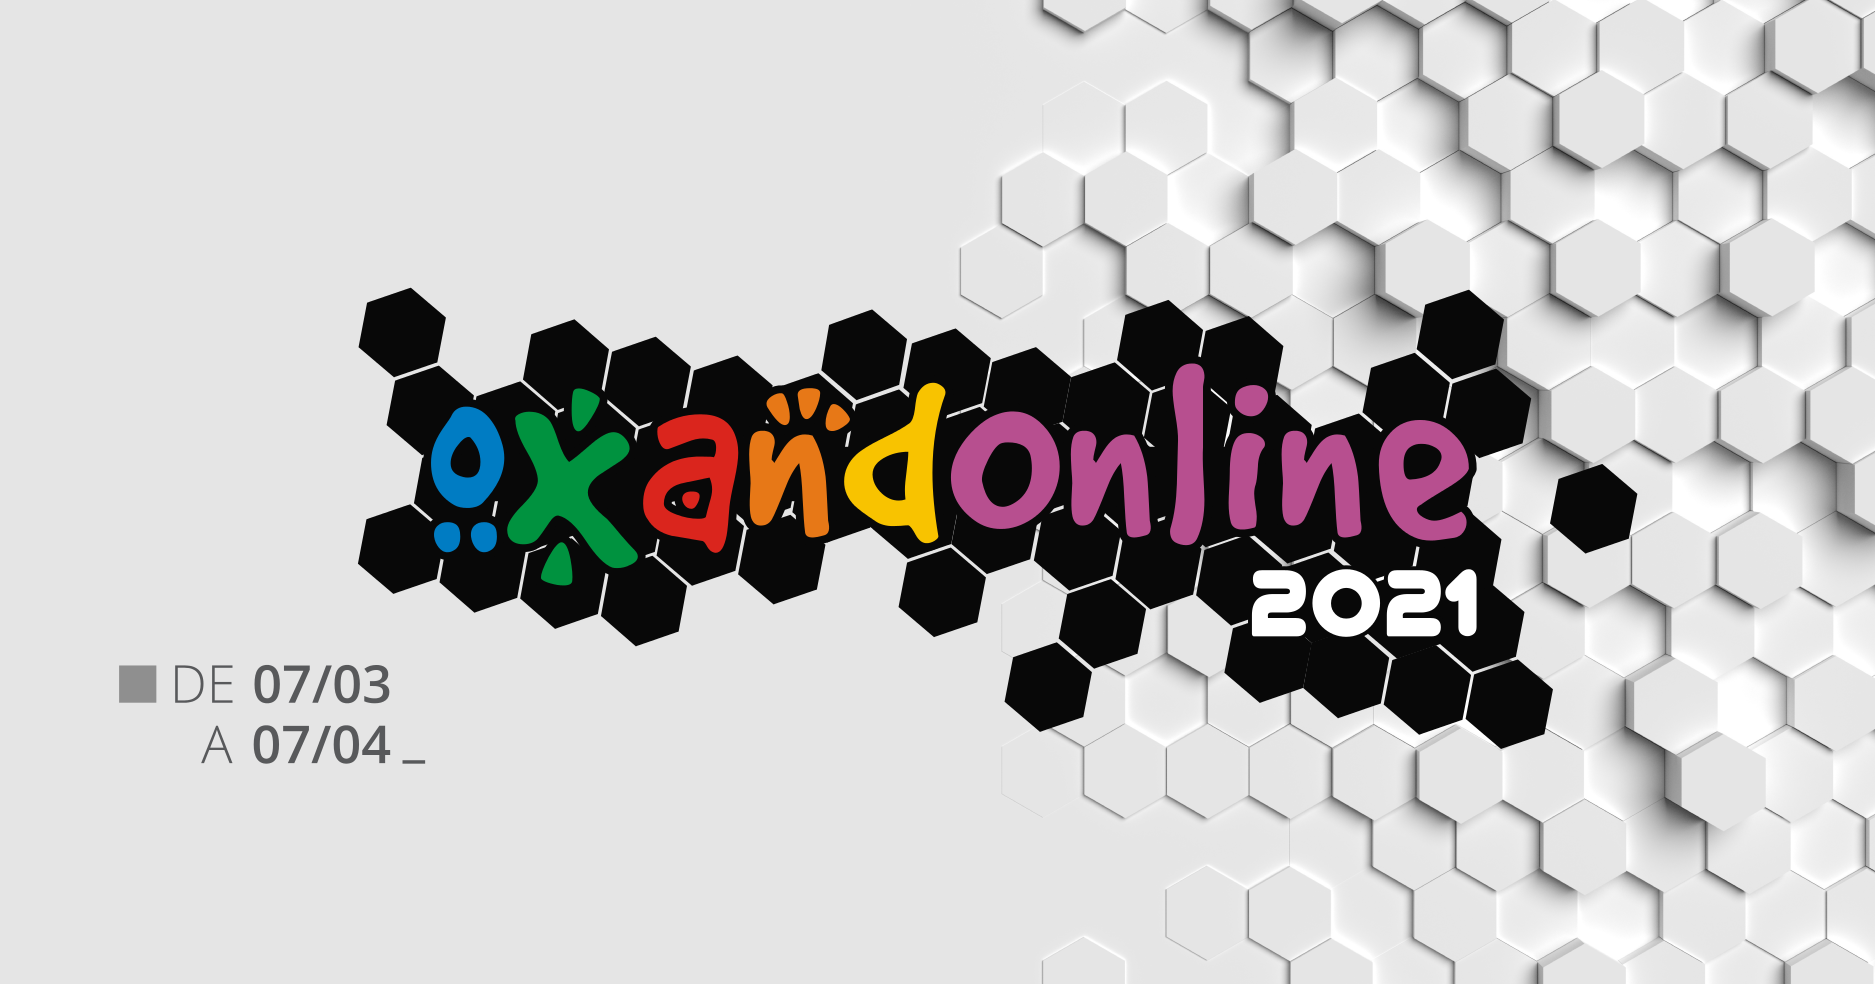 OxandONLINE 2021